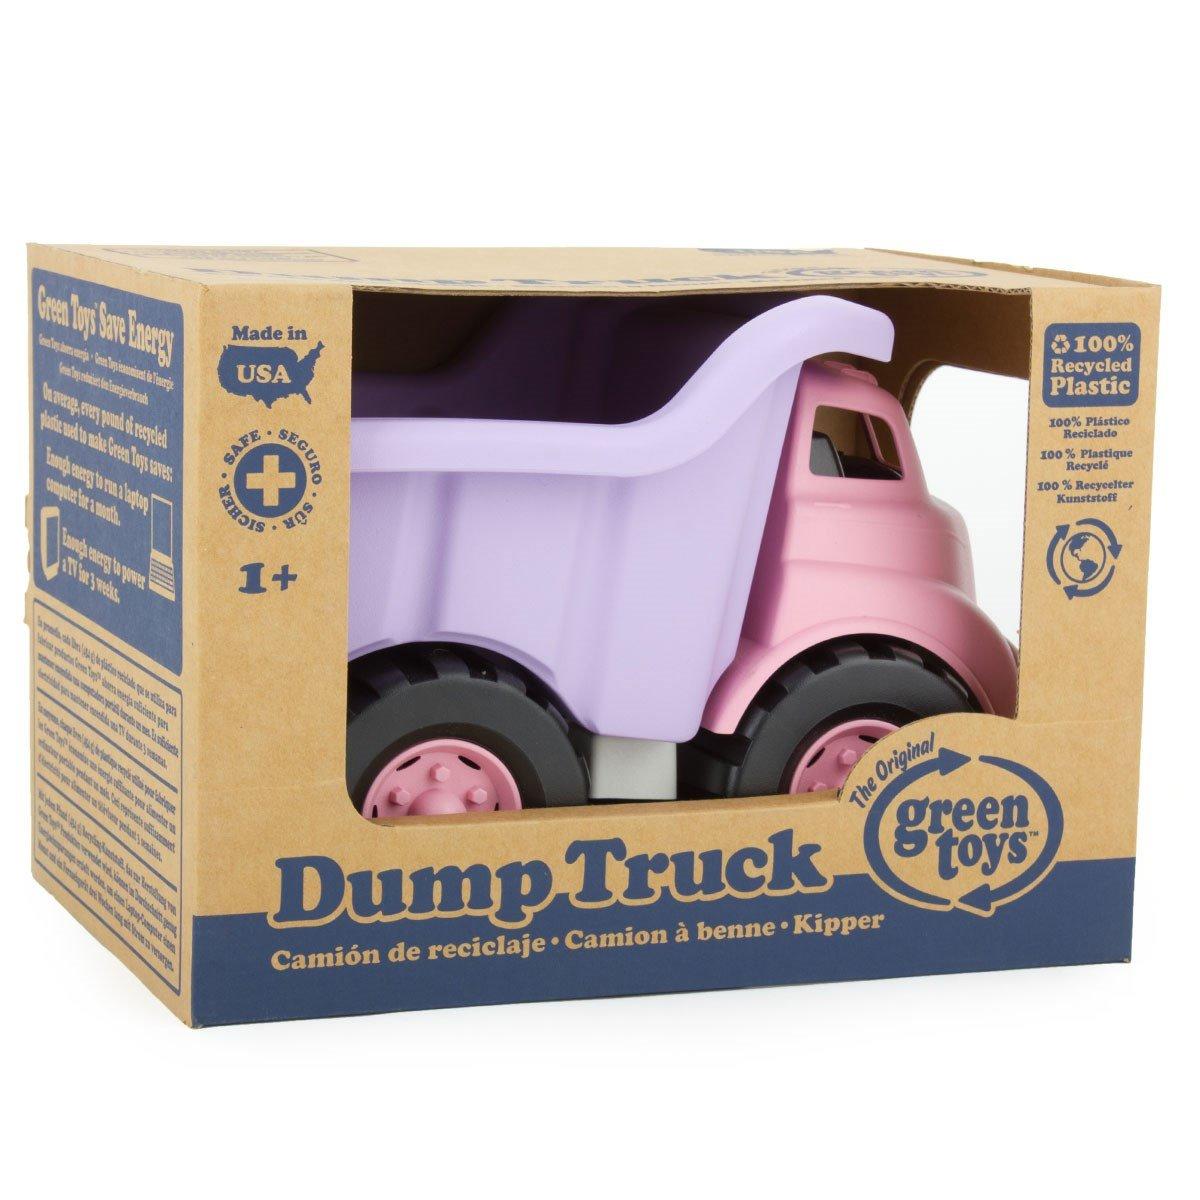 Pink dumper truck manufacturer's packaging.